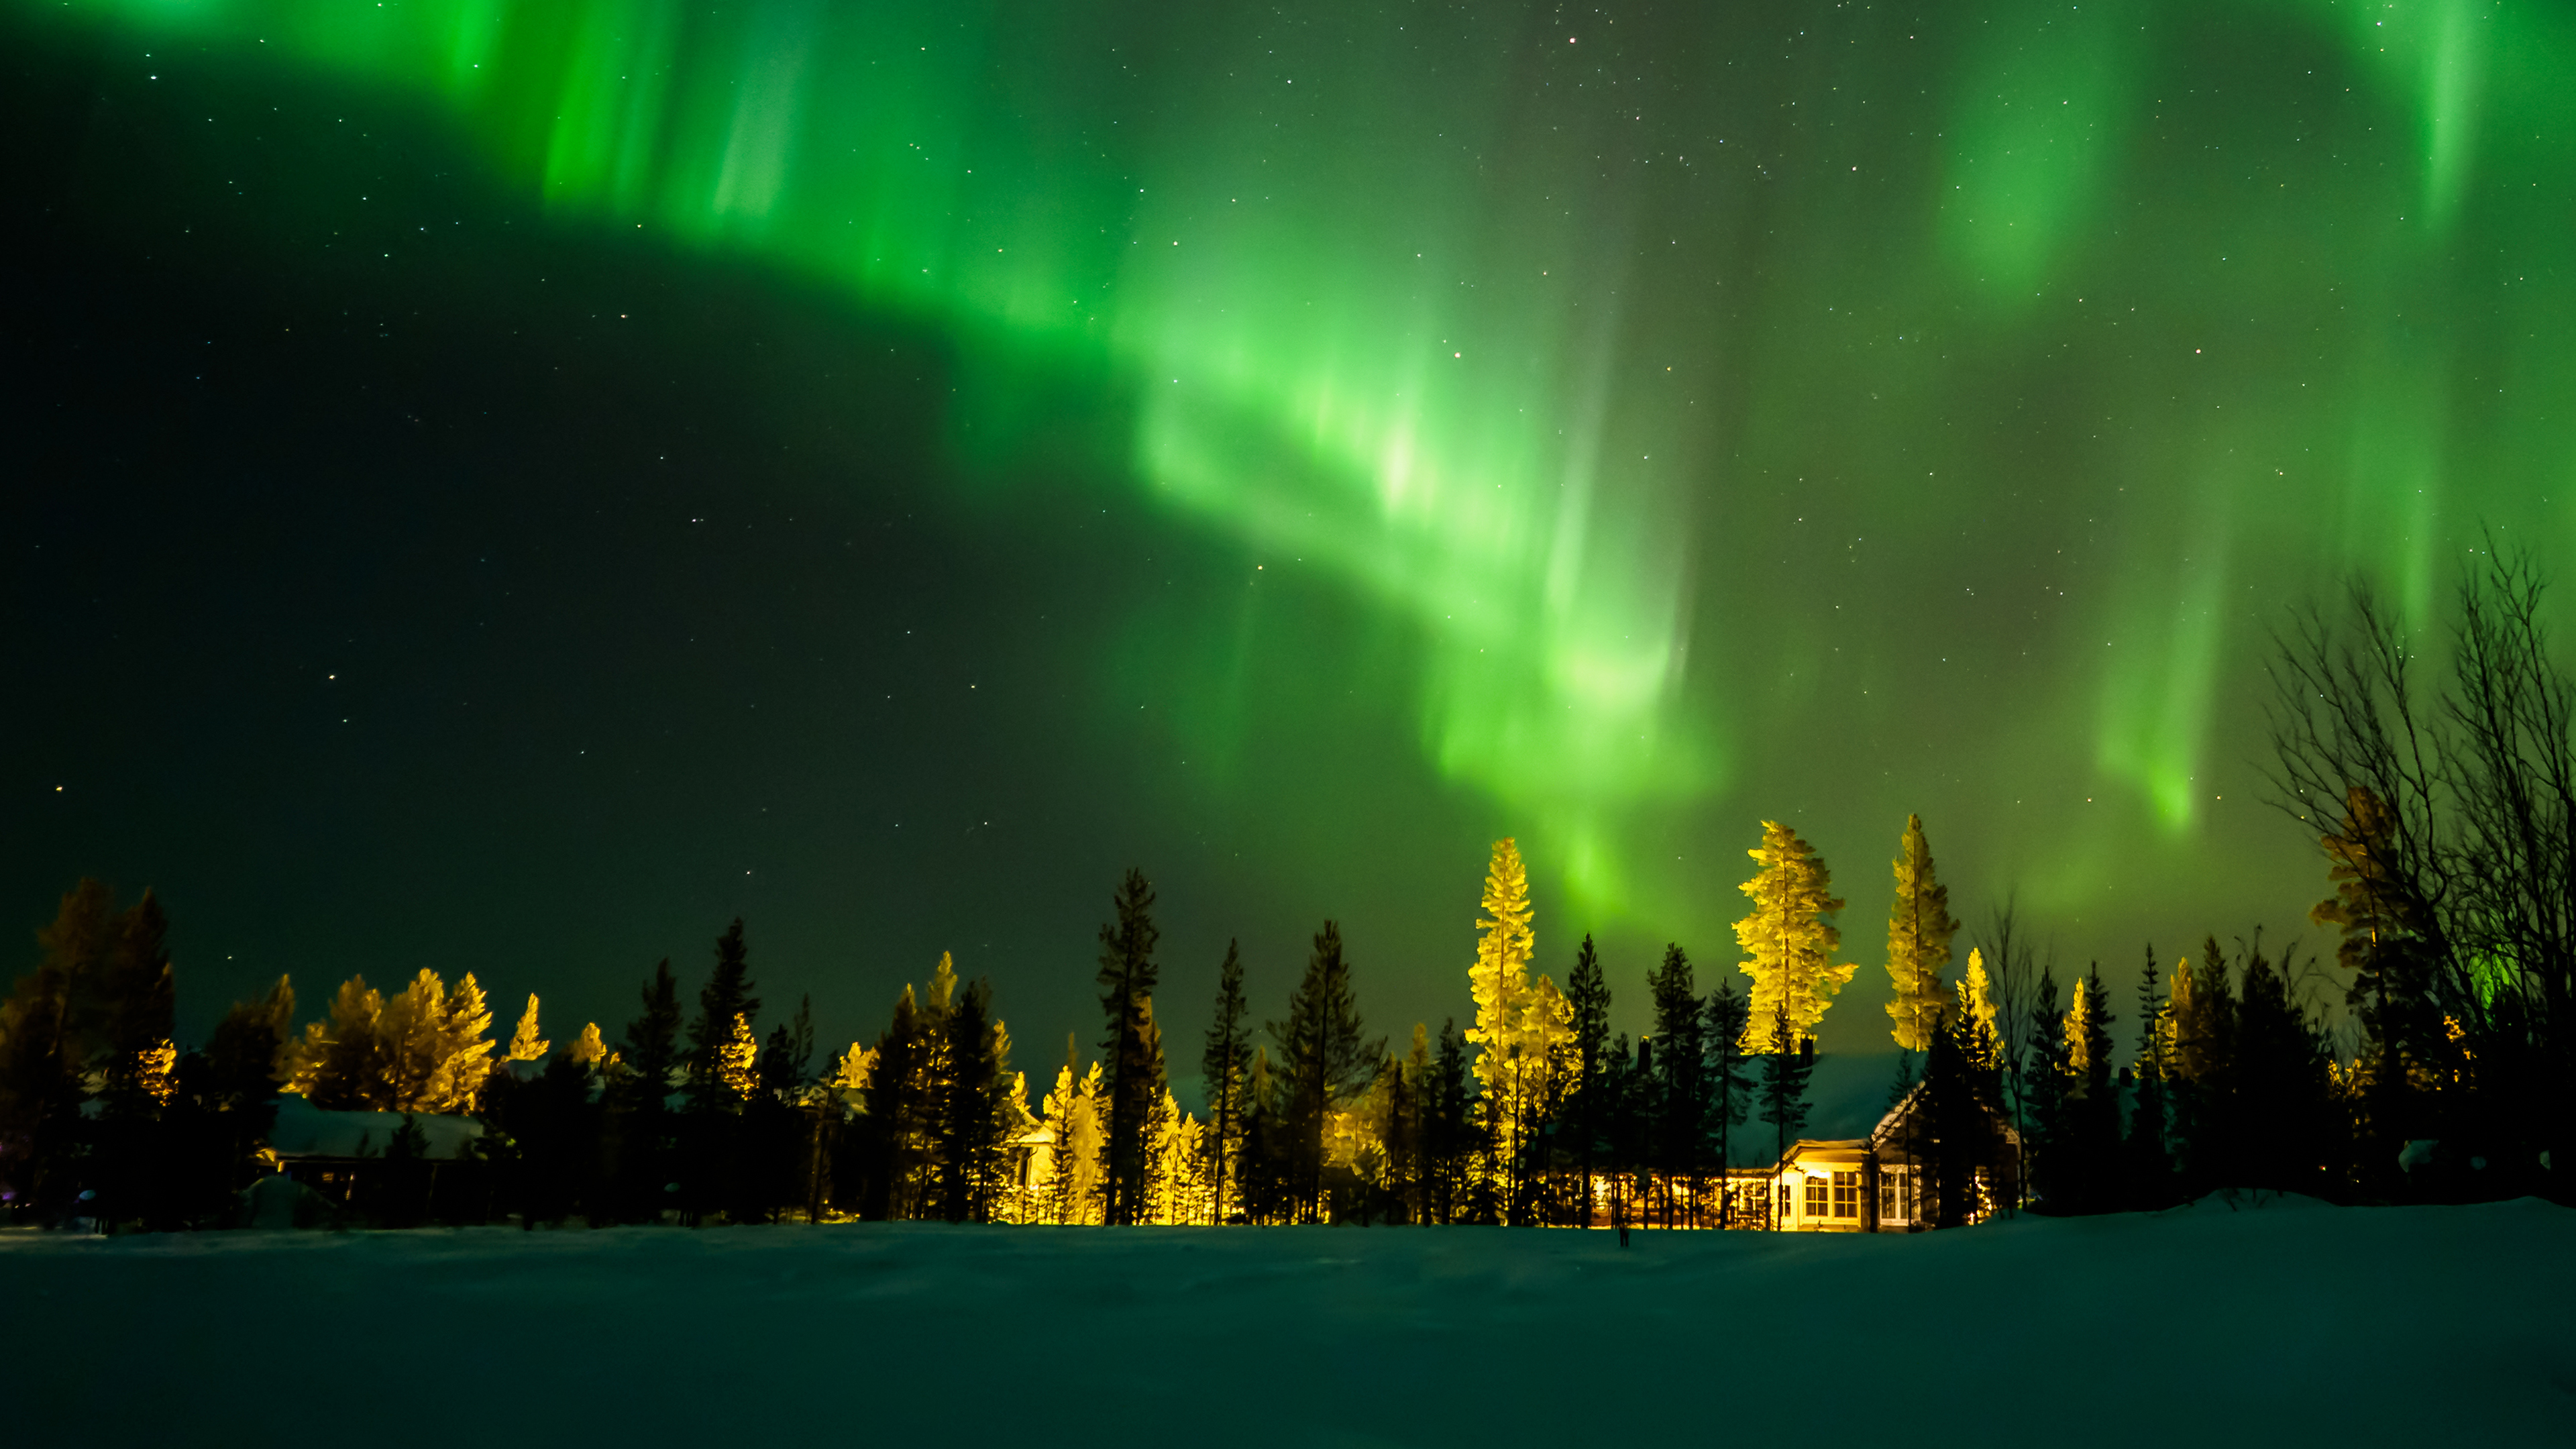 Download wallpaper 3840x2160 northern lights, green sky, finland 4k ...